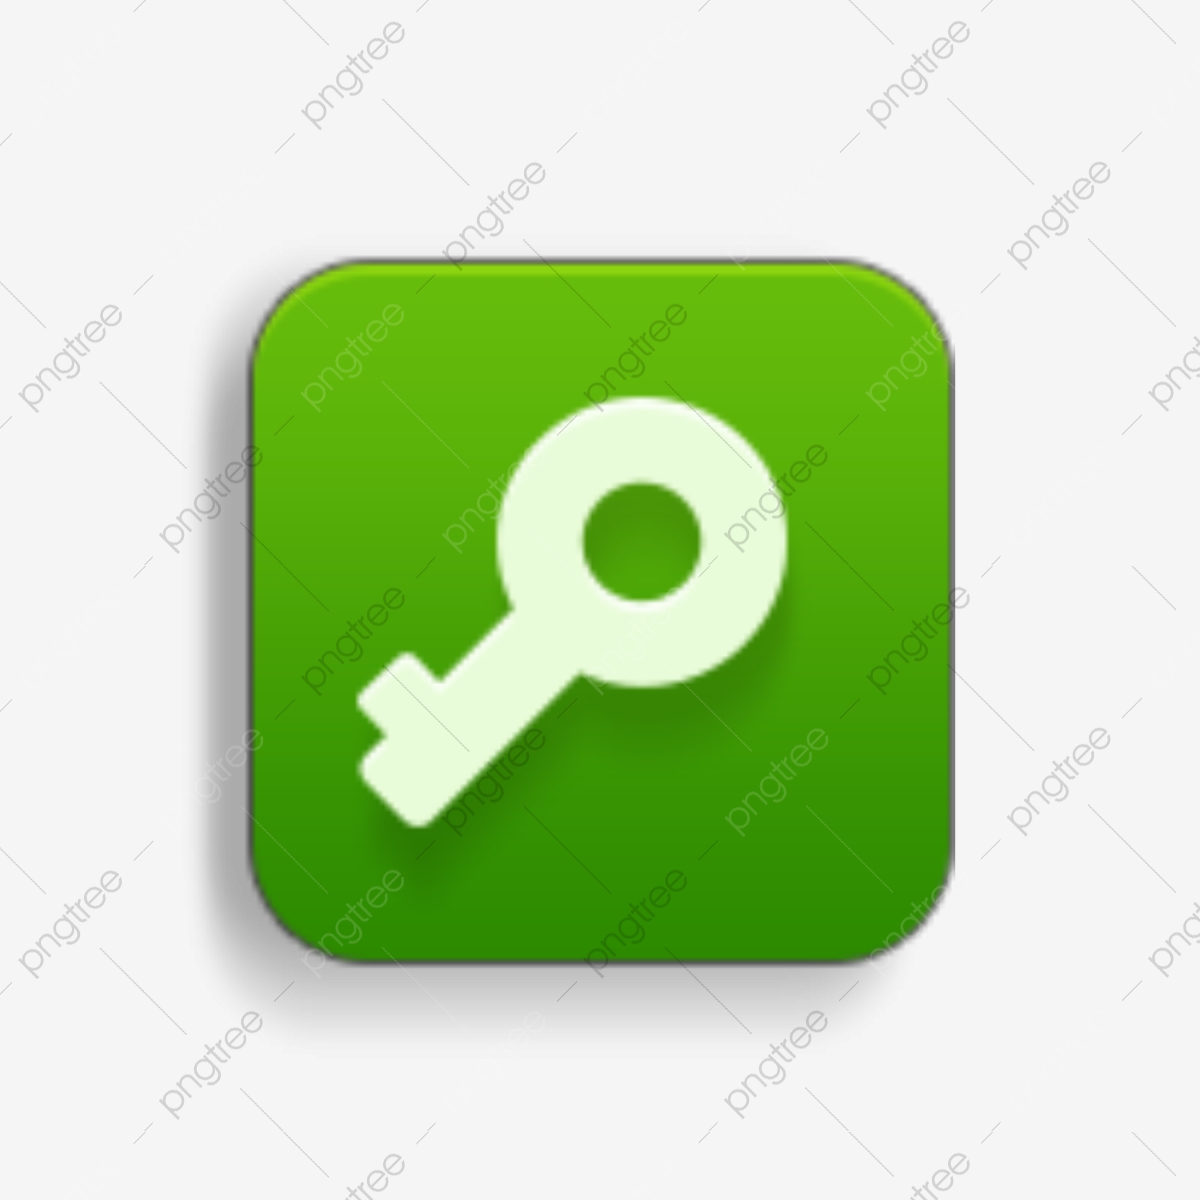 keys clipart software license